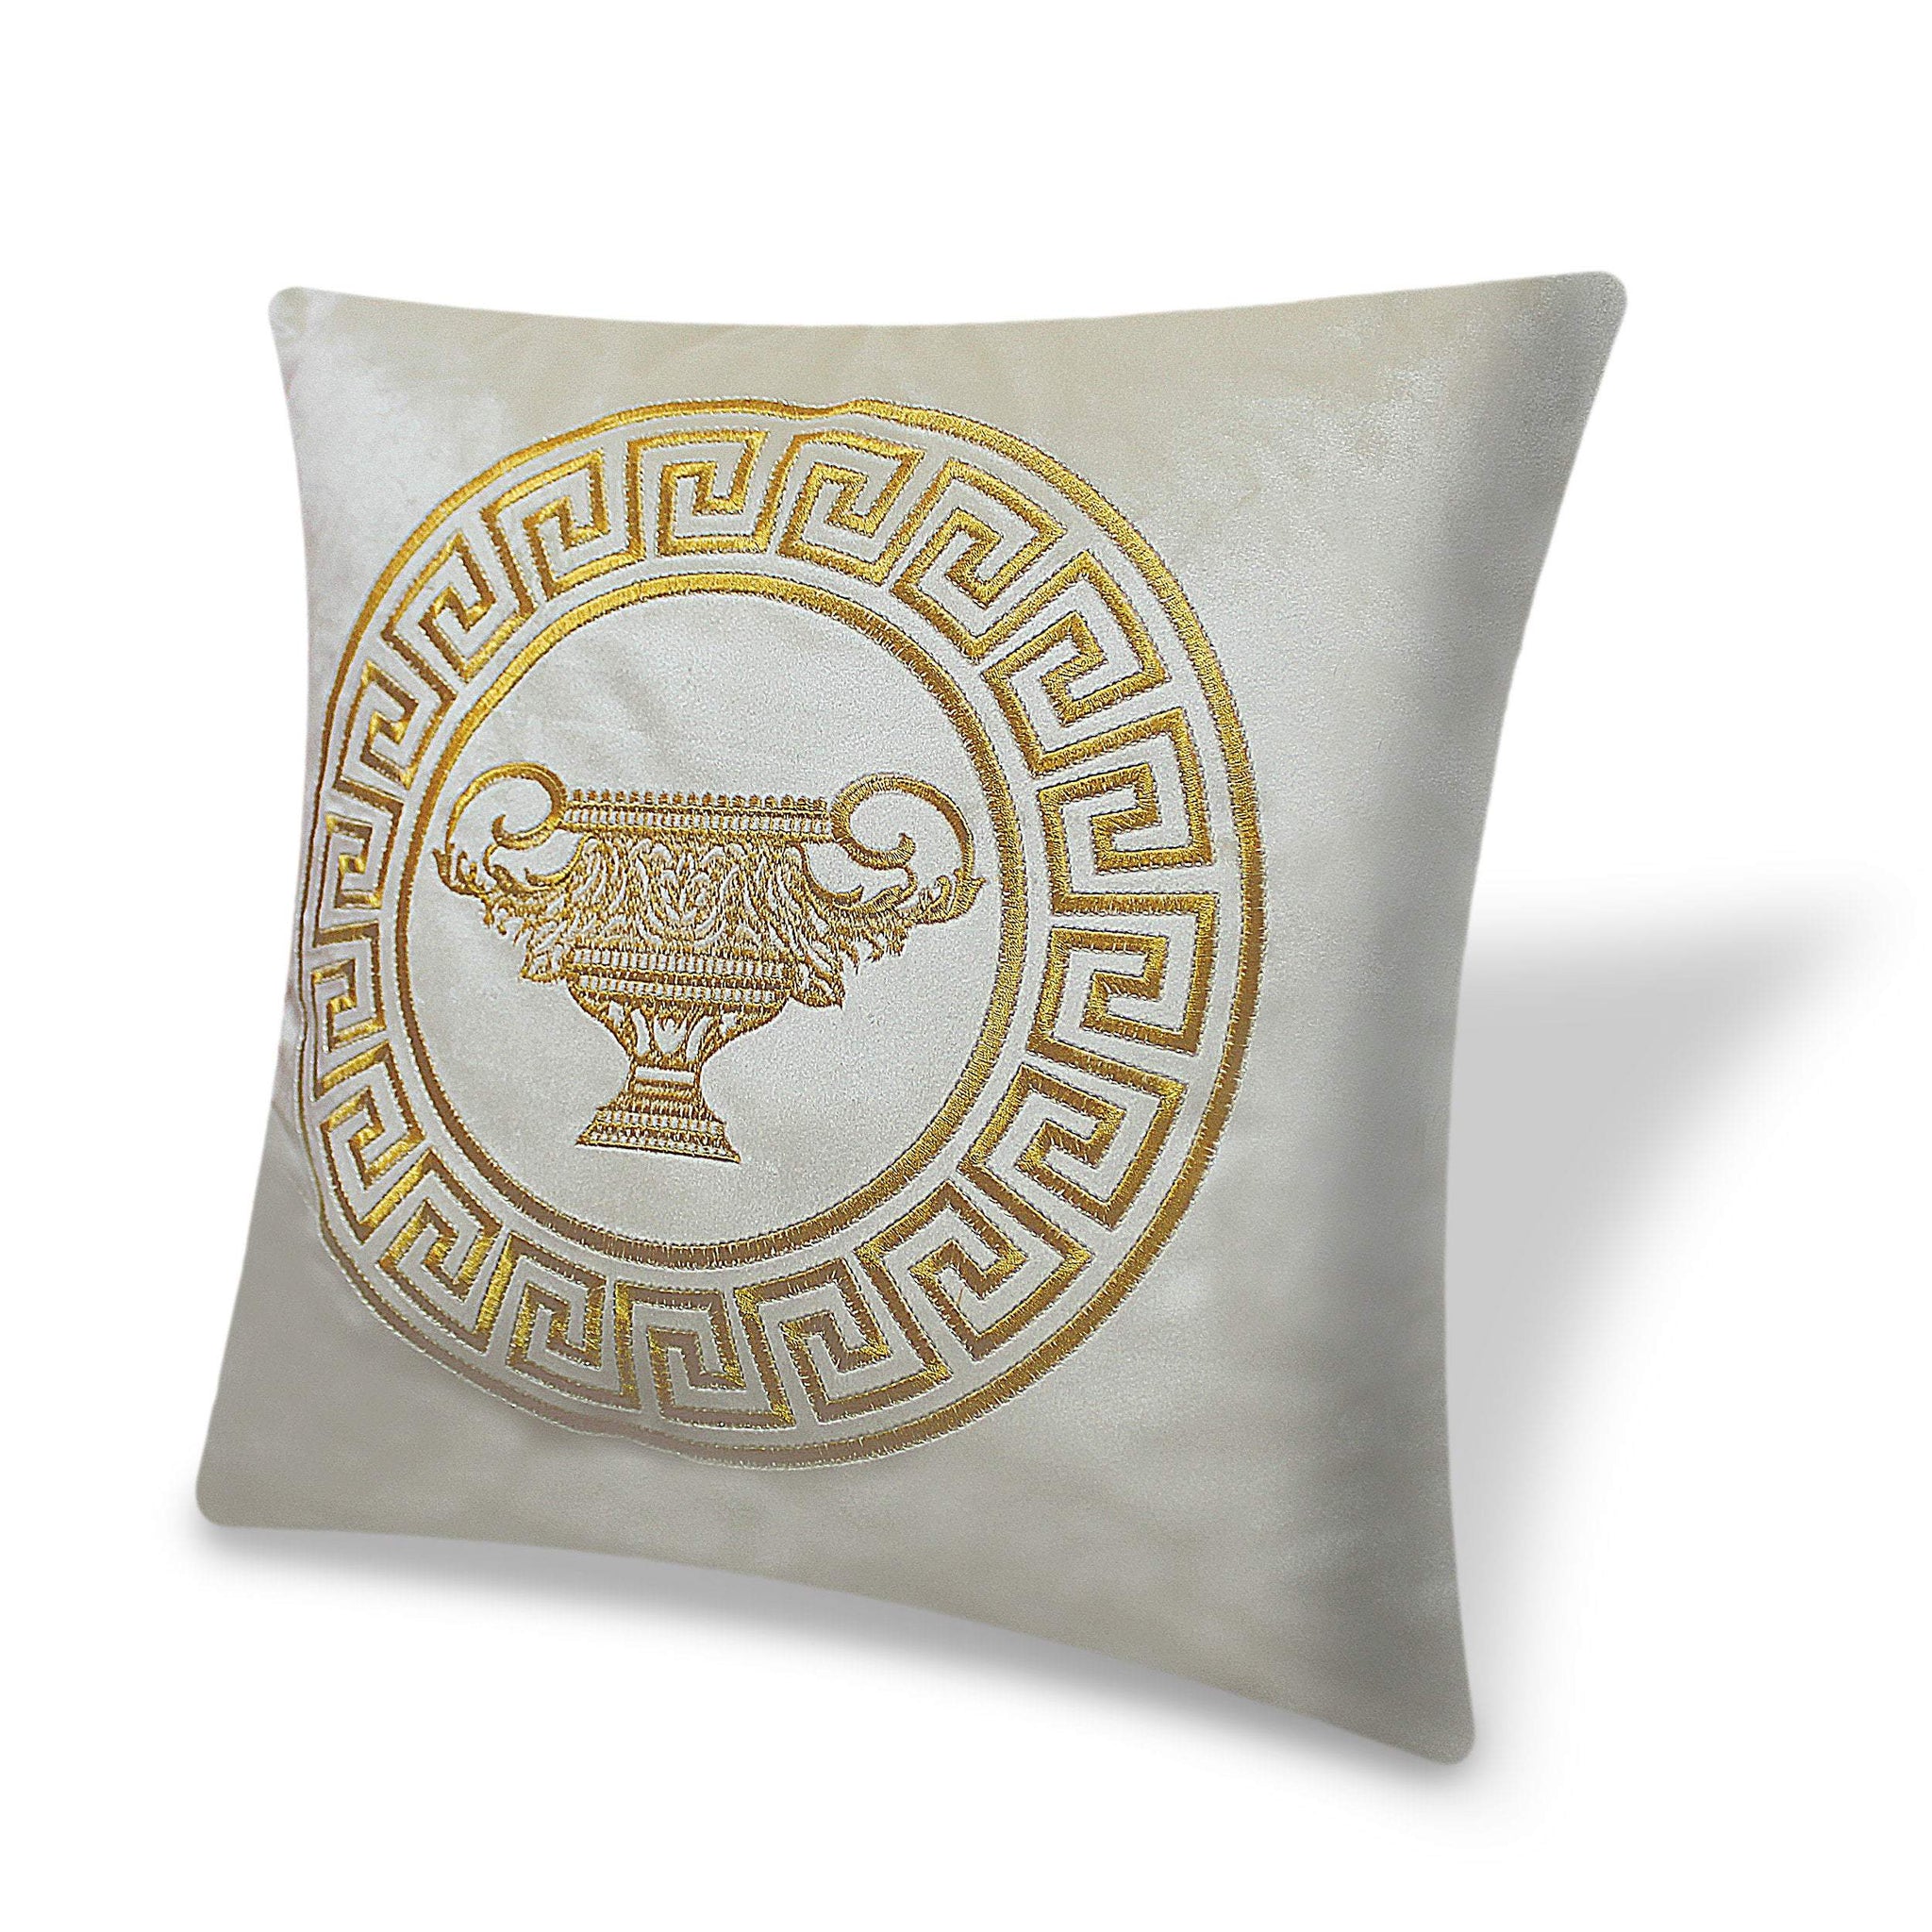 Beige Luxury Baroque Style Decorative Embroidered Cushion Cover Velvet Pillow Case Home European Sofa Throw Pillow